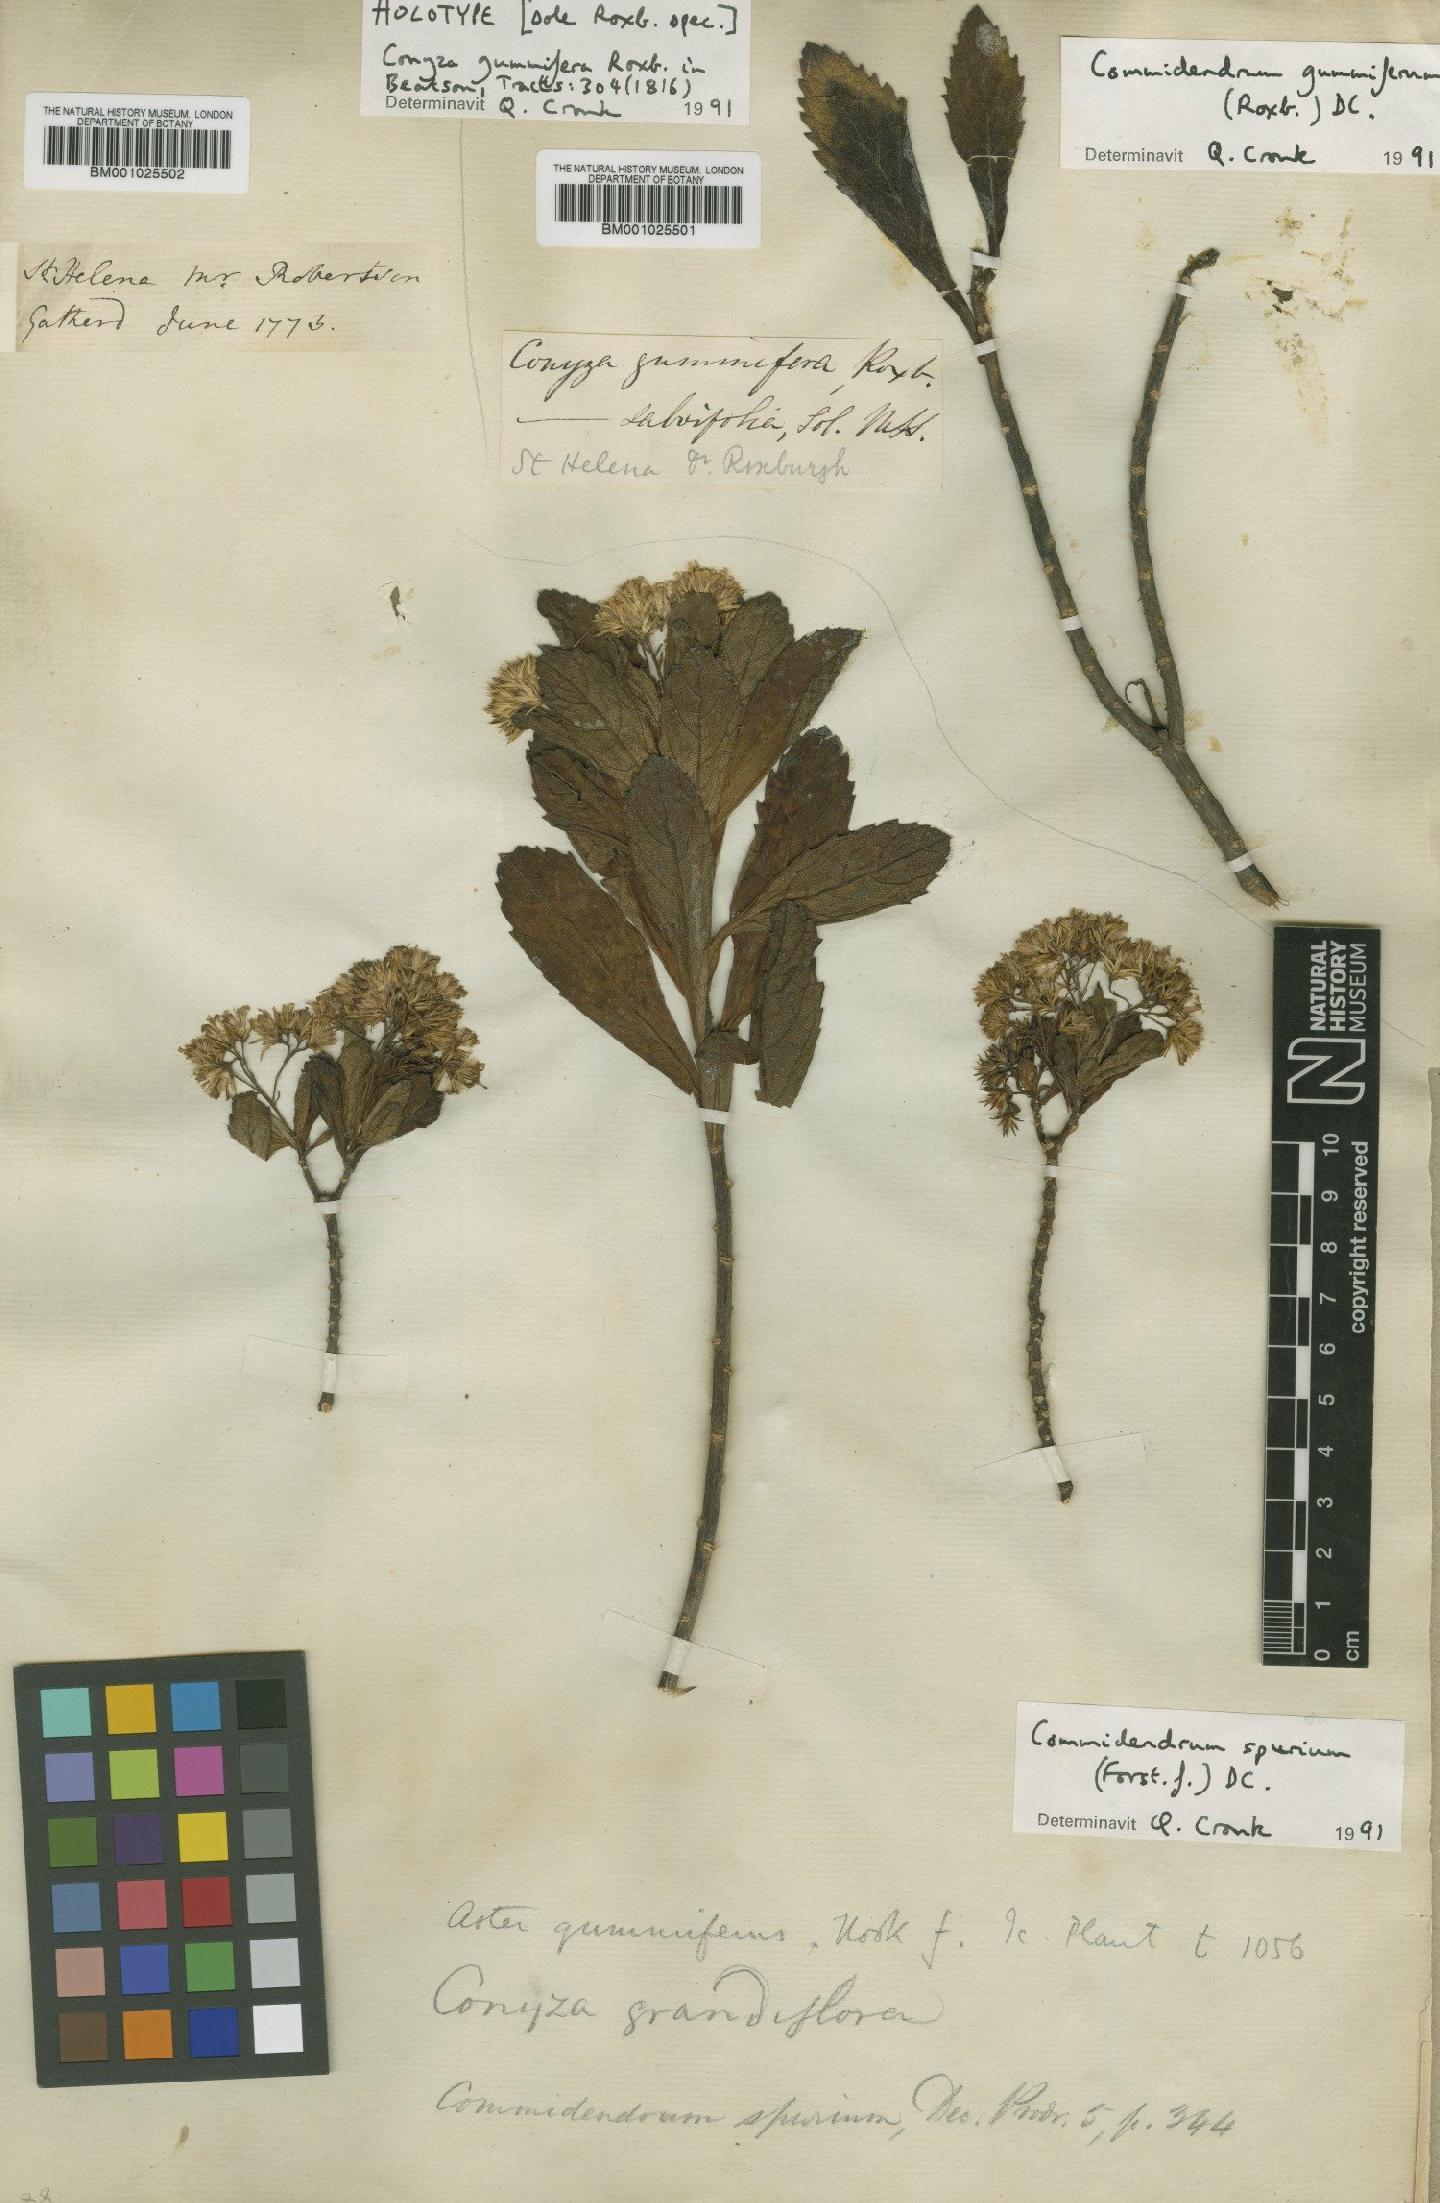 To NHMUK collection (Commidendrum gummiferum (Roxb.) DC.; Holotype; NHMUK:ecatalogue:1123617)